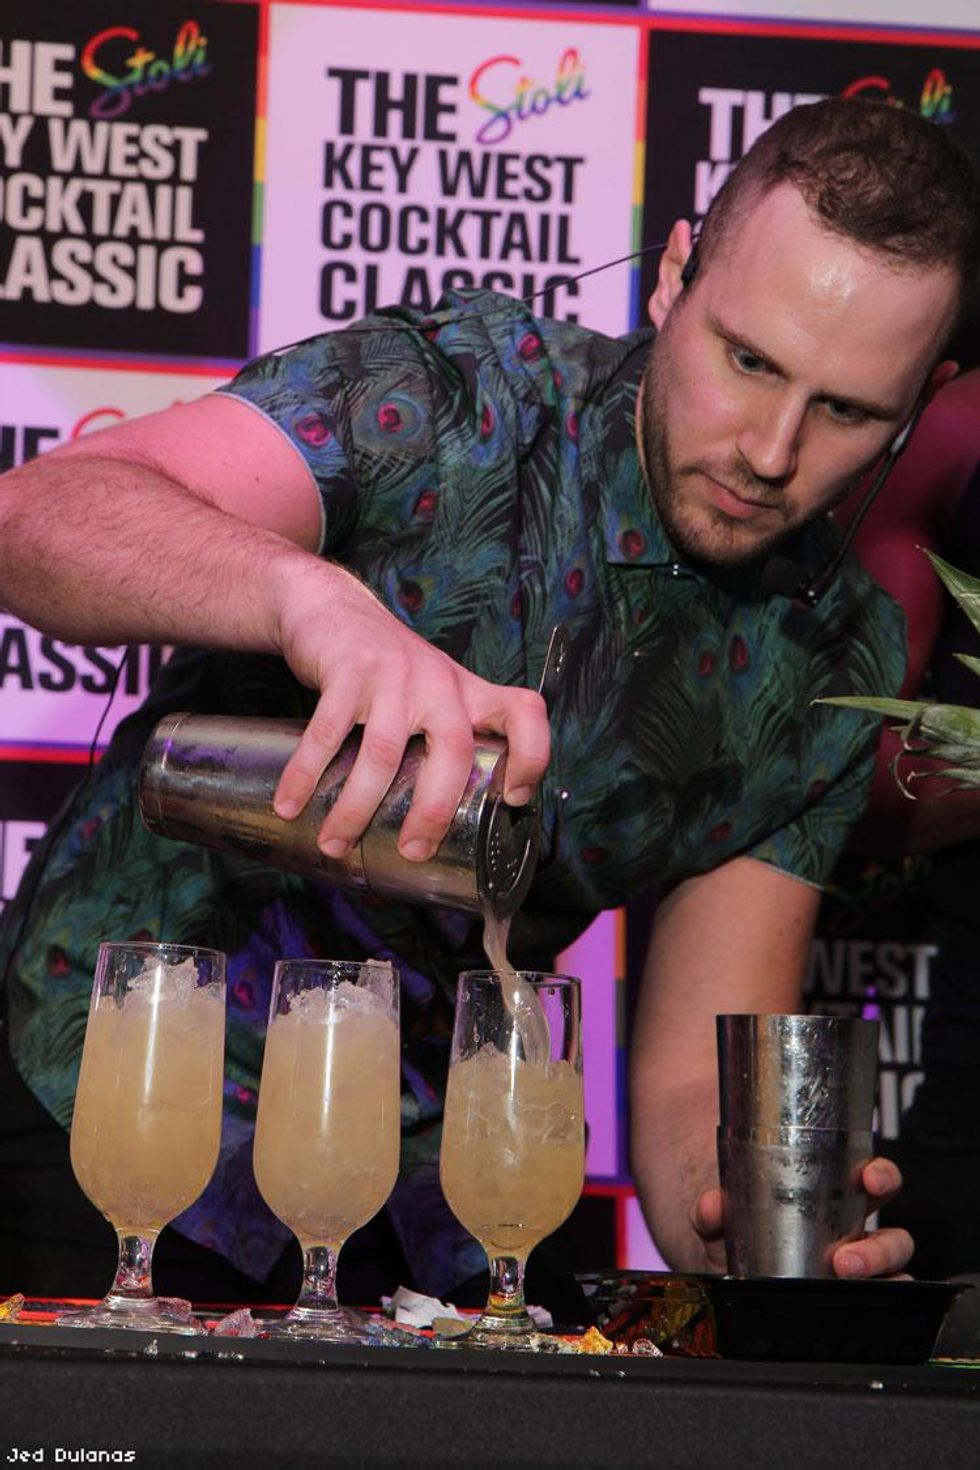 Stoli Key West Cocktail Classic: Chicago